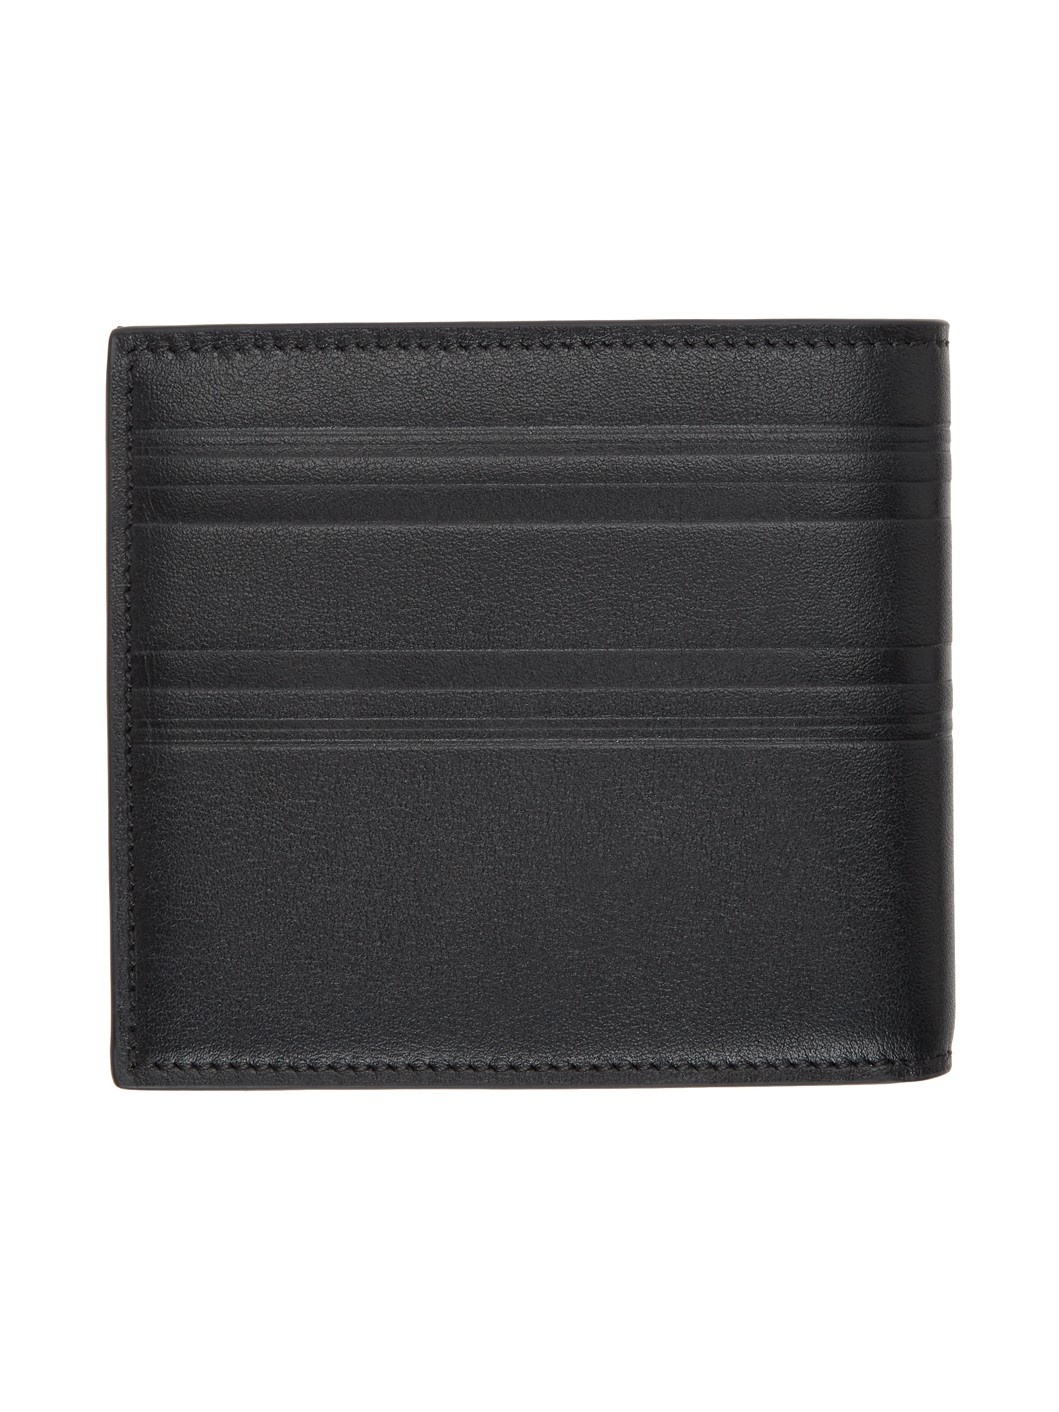 Black & Navy Classic Wallet - 2